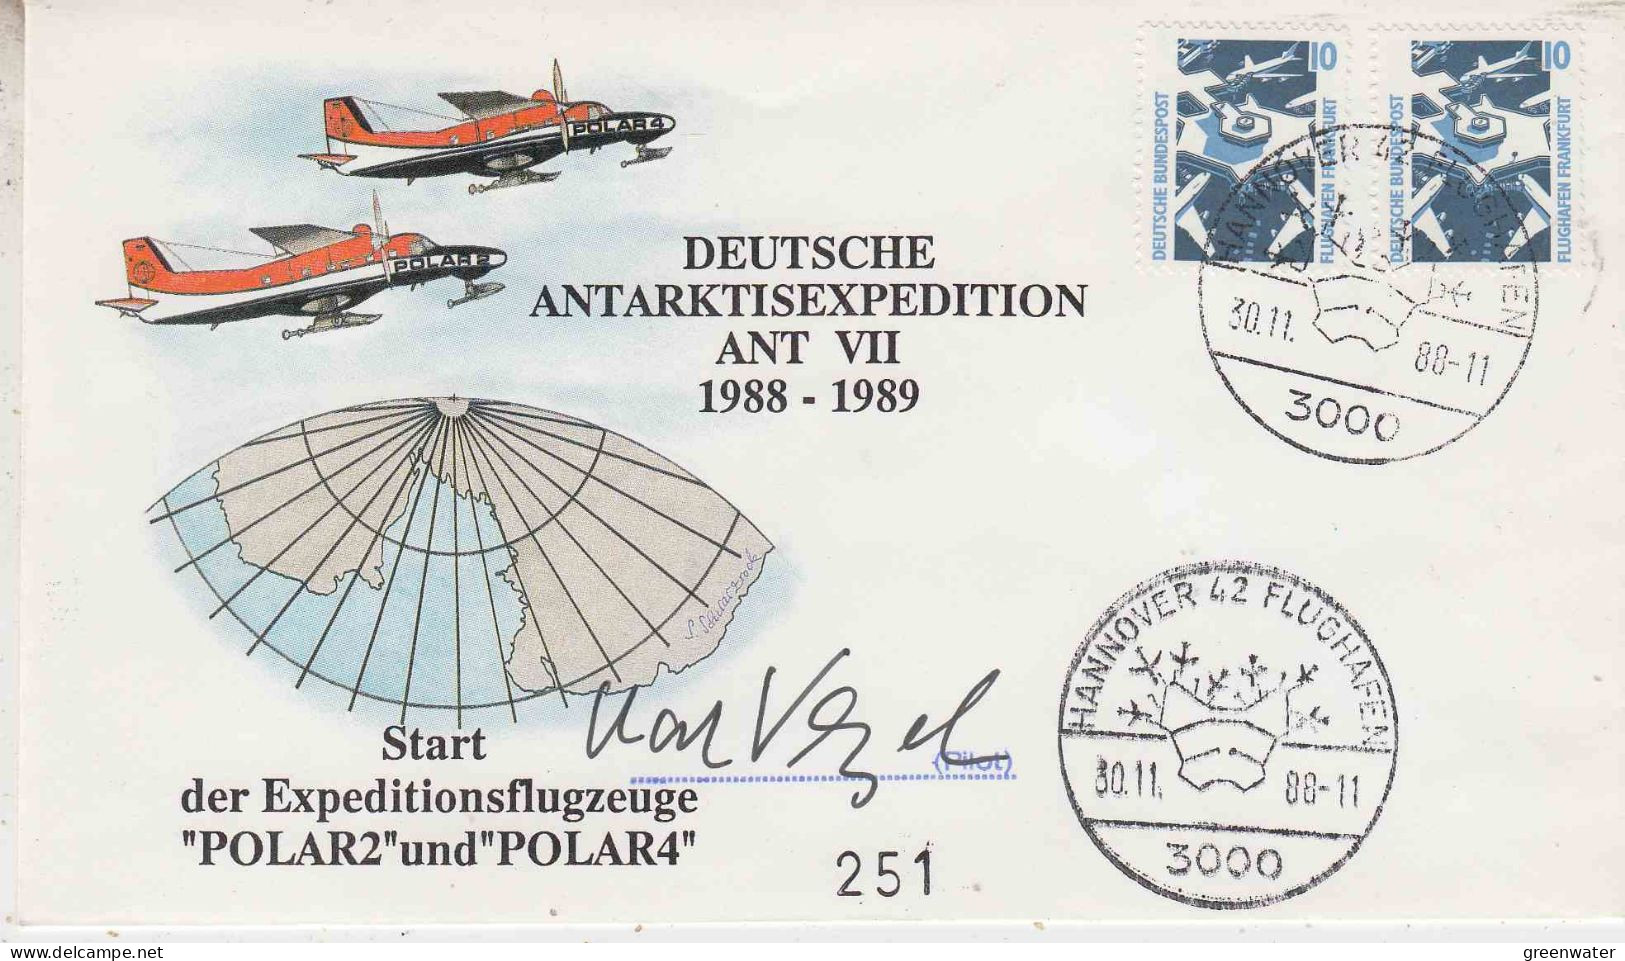 Germany 1988 Deutsche Antarktisexp Ant VII 1988-1989 Start Expeditionsflugzeuge Polar 2 & Polar 4 Cover Signature(PT162) - Polar Flights